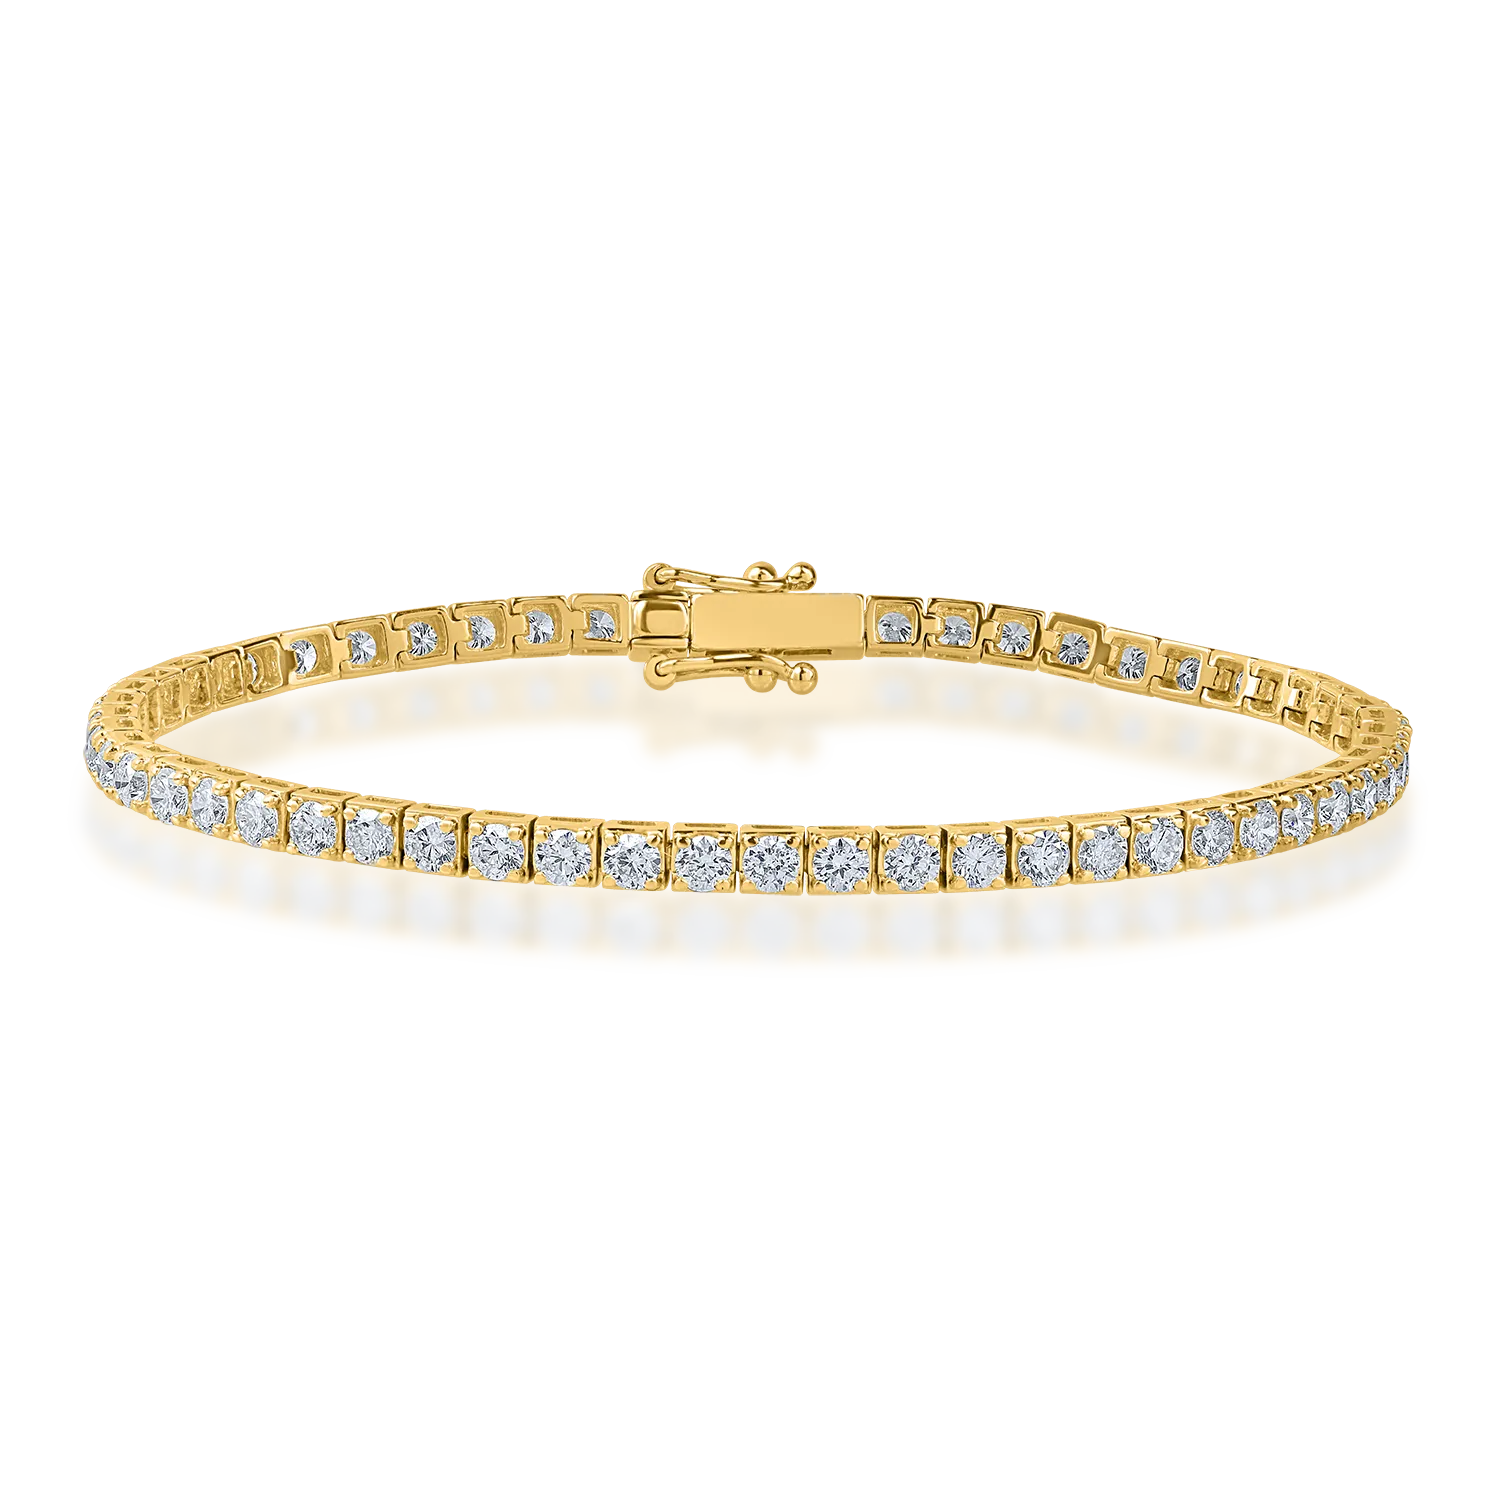 Yellow gold tennis bracelet with 2.9ct diamonds